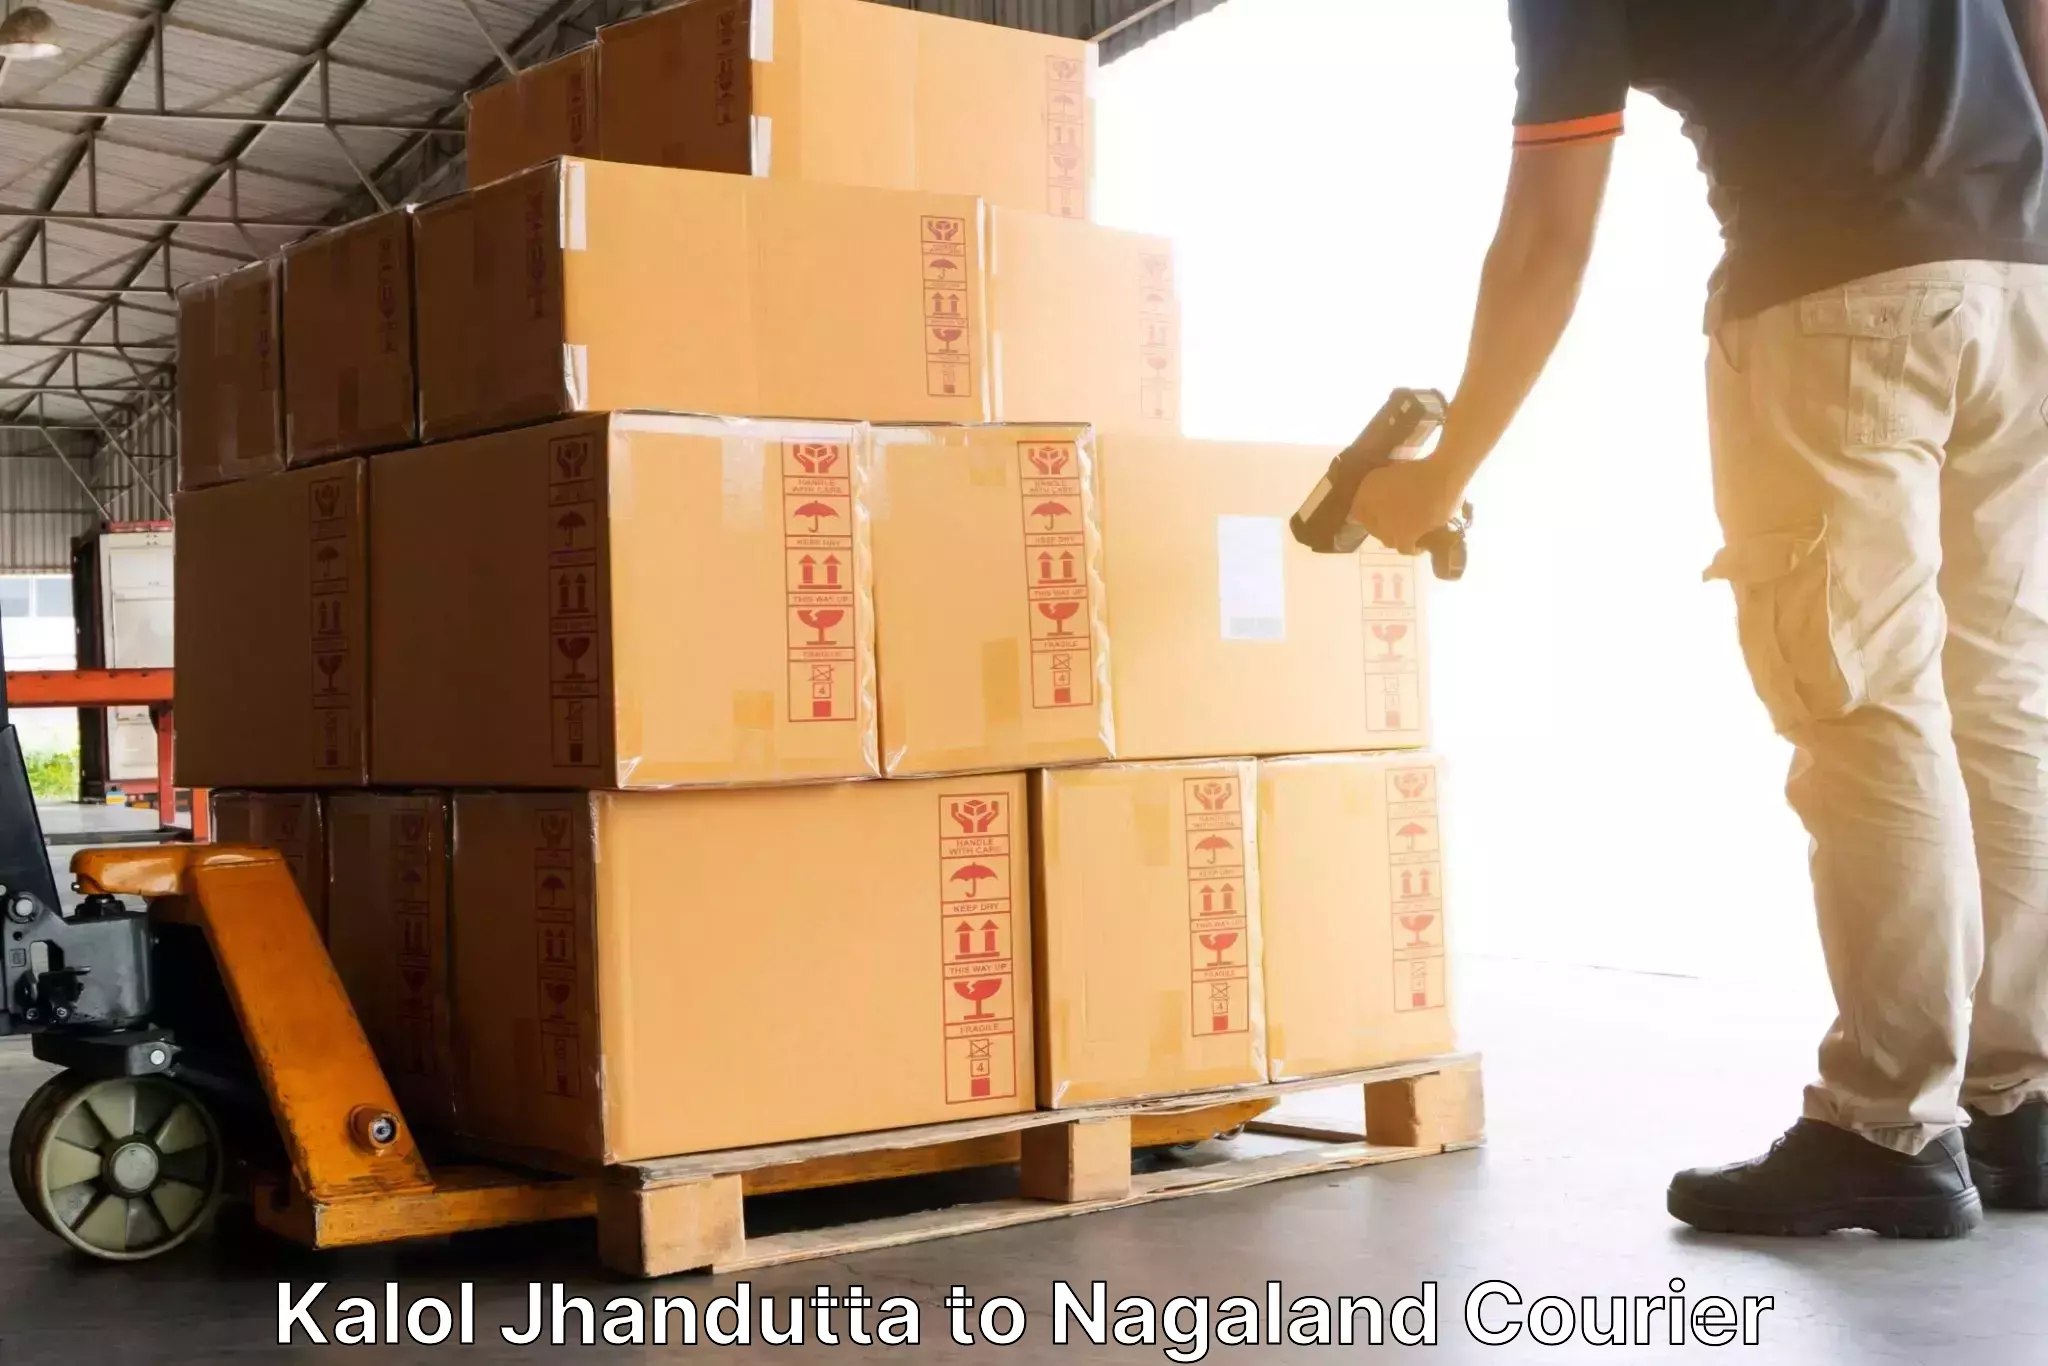 Sustainable courier practices Kalol Jhandutta to Dimapur